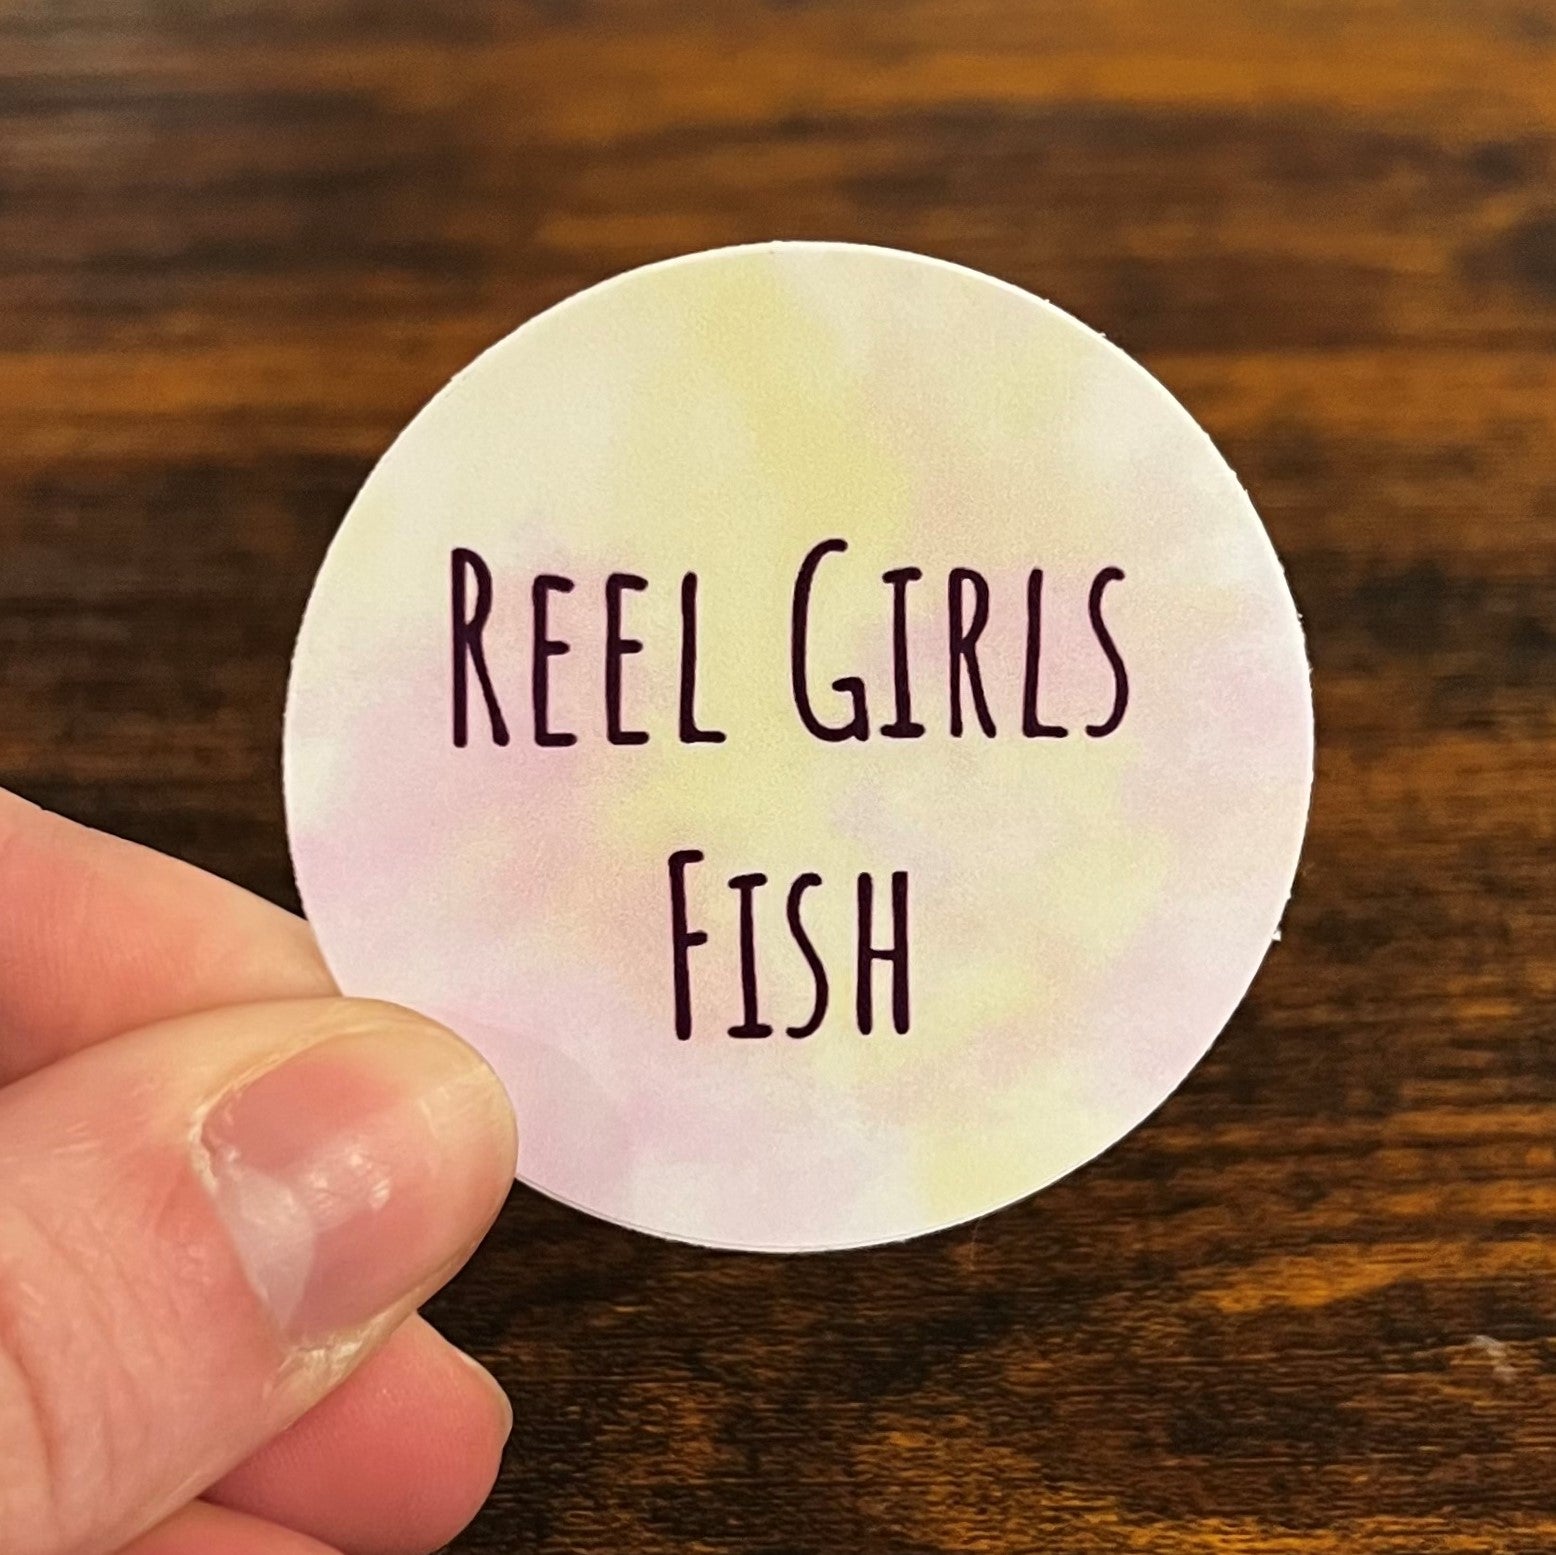 Reel Girls Fish Sticker